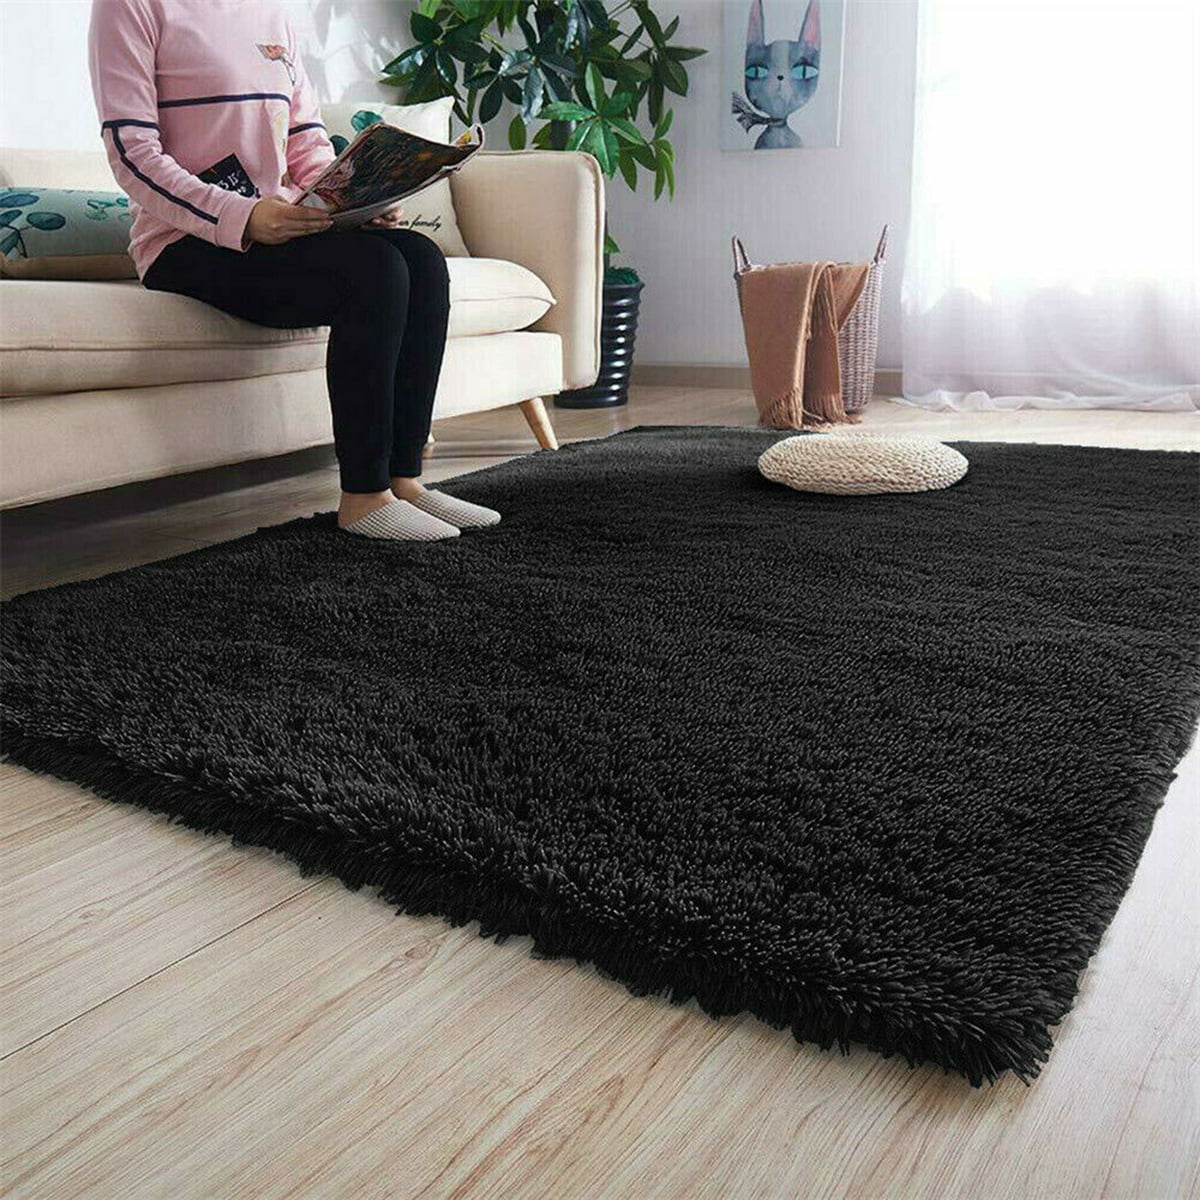 Fluffy Rugs Anti-Skid Shaggy Area Rug Carpet Dining Room Home Bedroom Floor Mat 